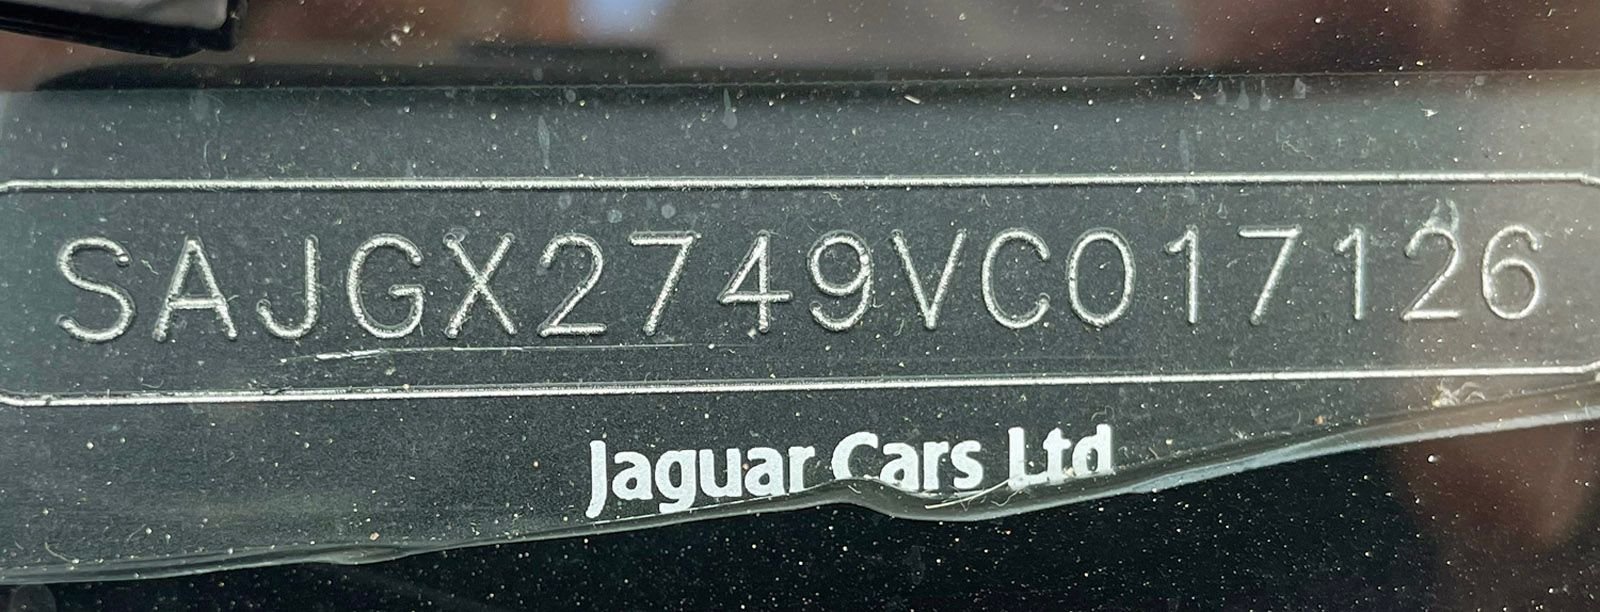 23052 | 1997 Jaguar XK8 Convertible | Connors Motorcar Company